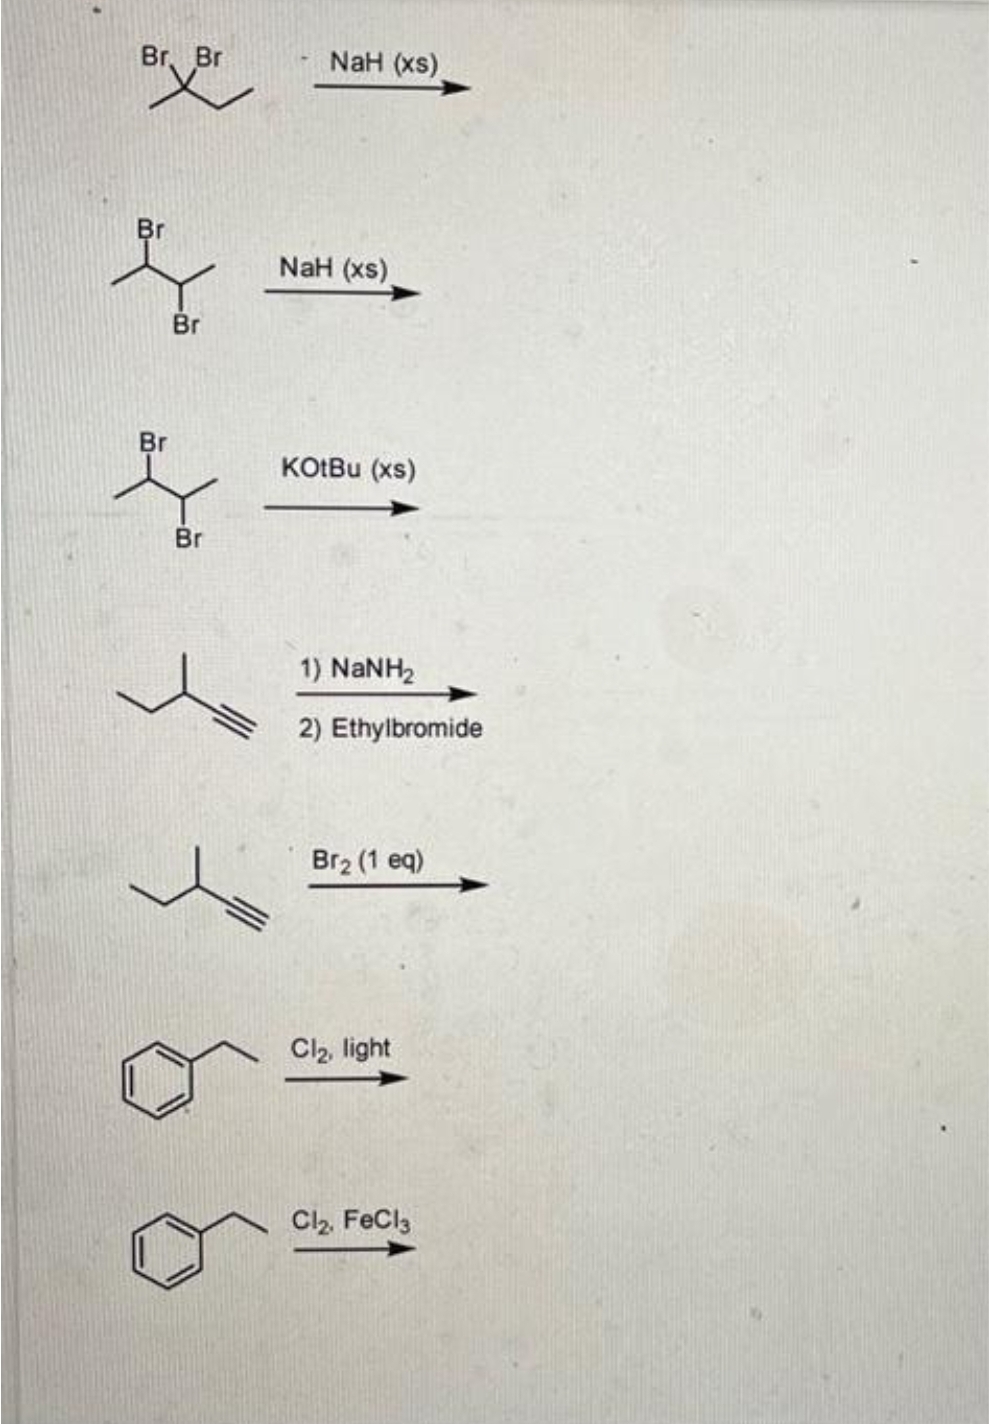 Br. Br
re
Br
Br
Br
Br
NaH (xs)
NaH (xs)
KOtBu (xs)
1) NaNH,
2) Ethylbromide
Br₂ (1 eq)
Cl₂, light
Cl₂, FeCl3